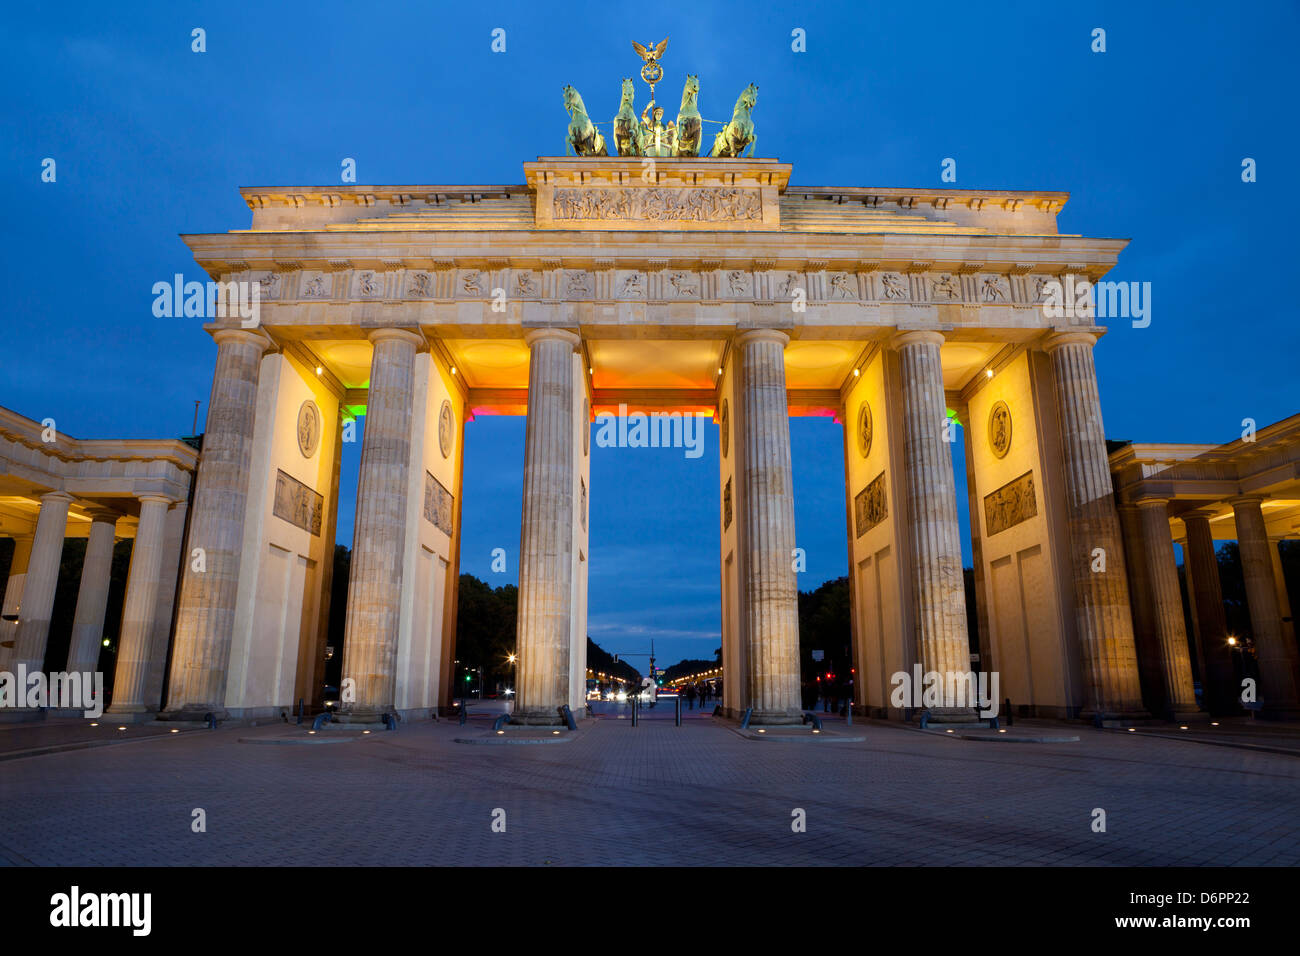 La nuit porte de Brandebourg, Berlin, Allemagne, Europe Banque D'Images